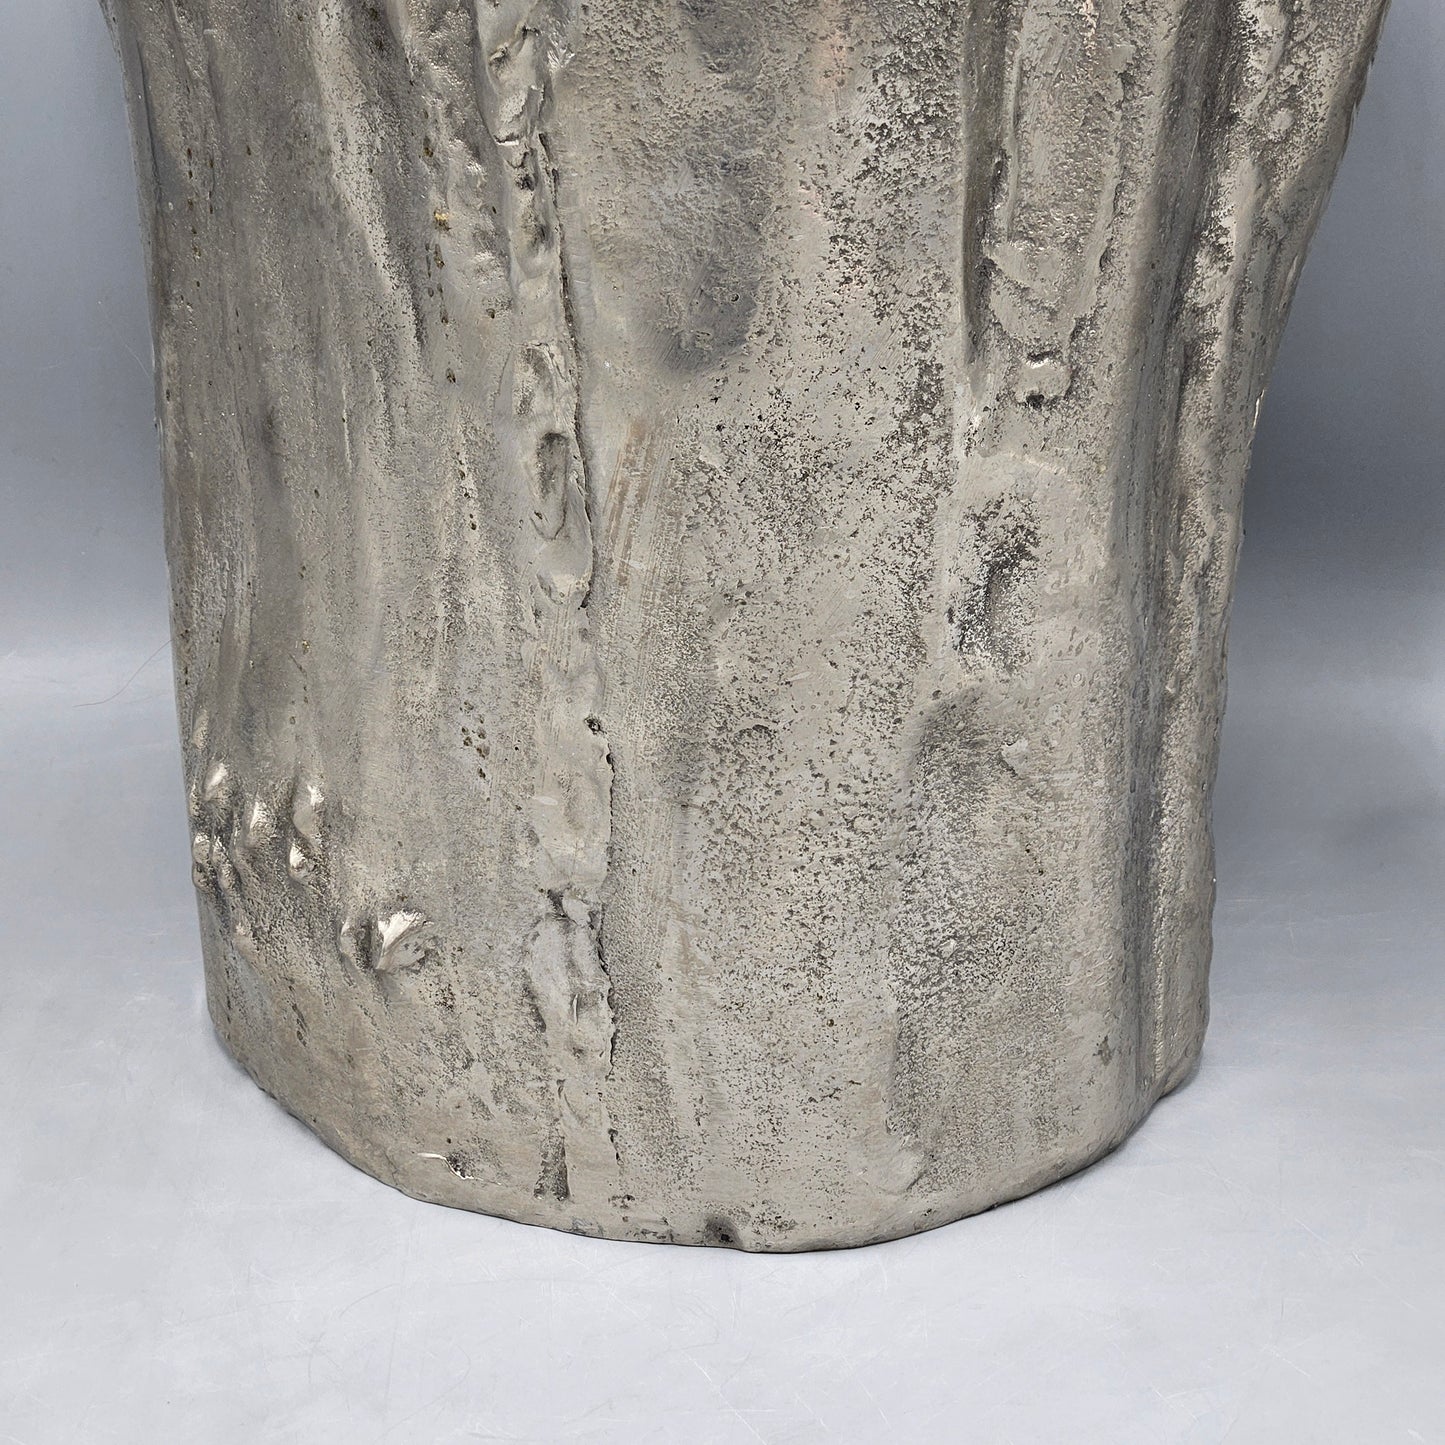 Michael Aram Style Large Tree Vase - Faux Bois Aluminum Tree Stump Wastebasket / Vase